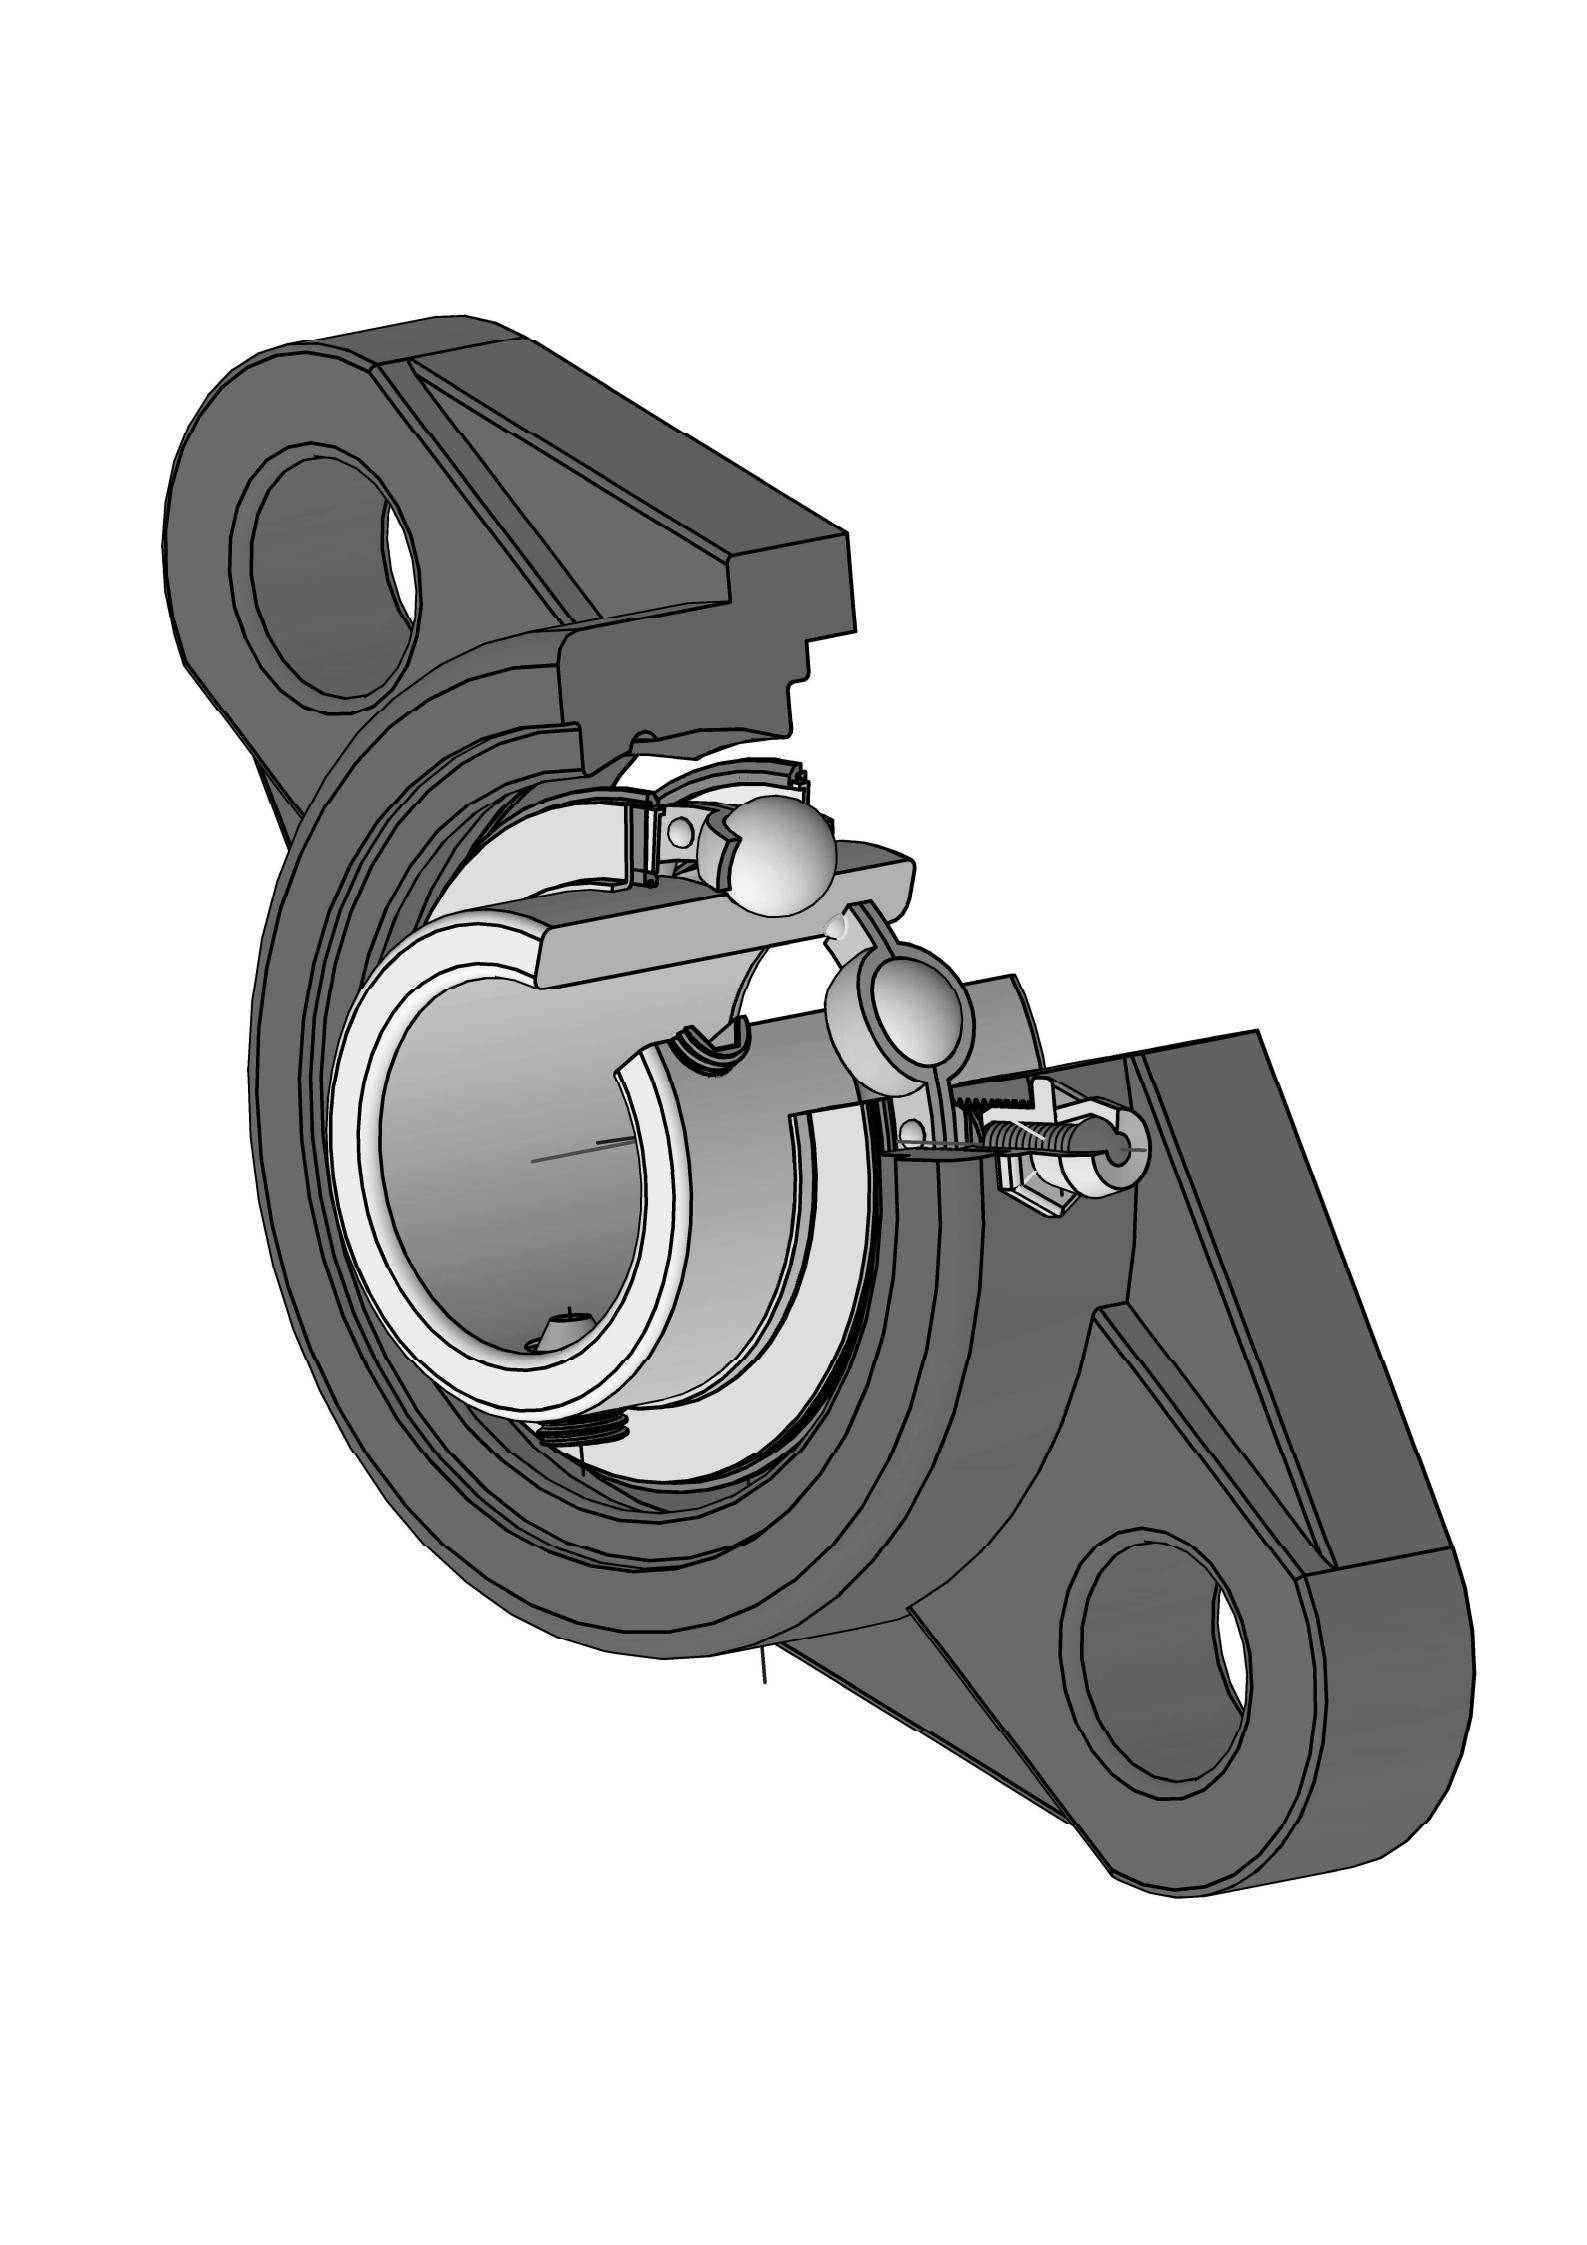 UCFT209-27 1-11/16 လက်မ bore ပါရှိသော Bolt Oval Flange bearing ယူနစ်များ